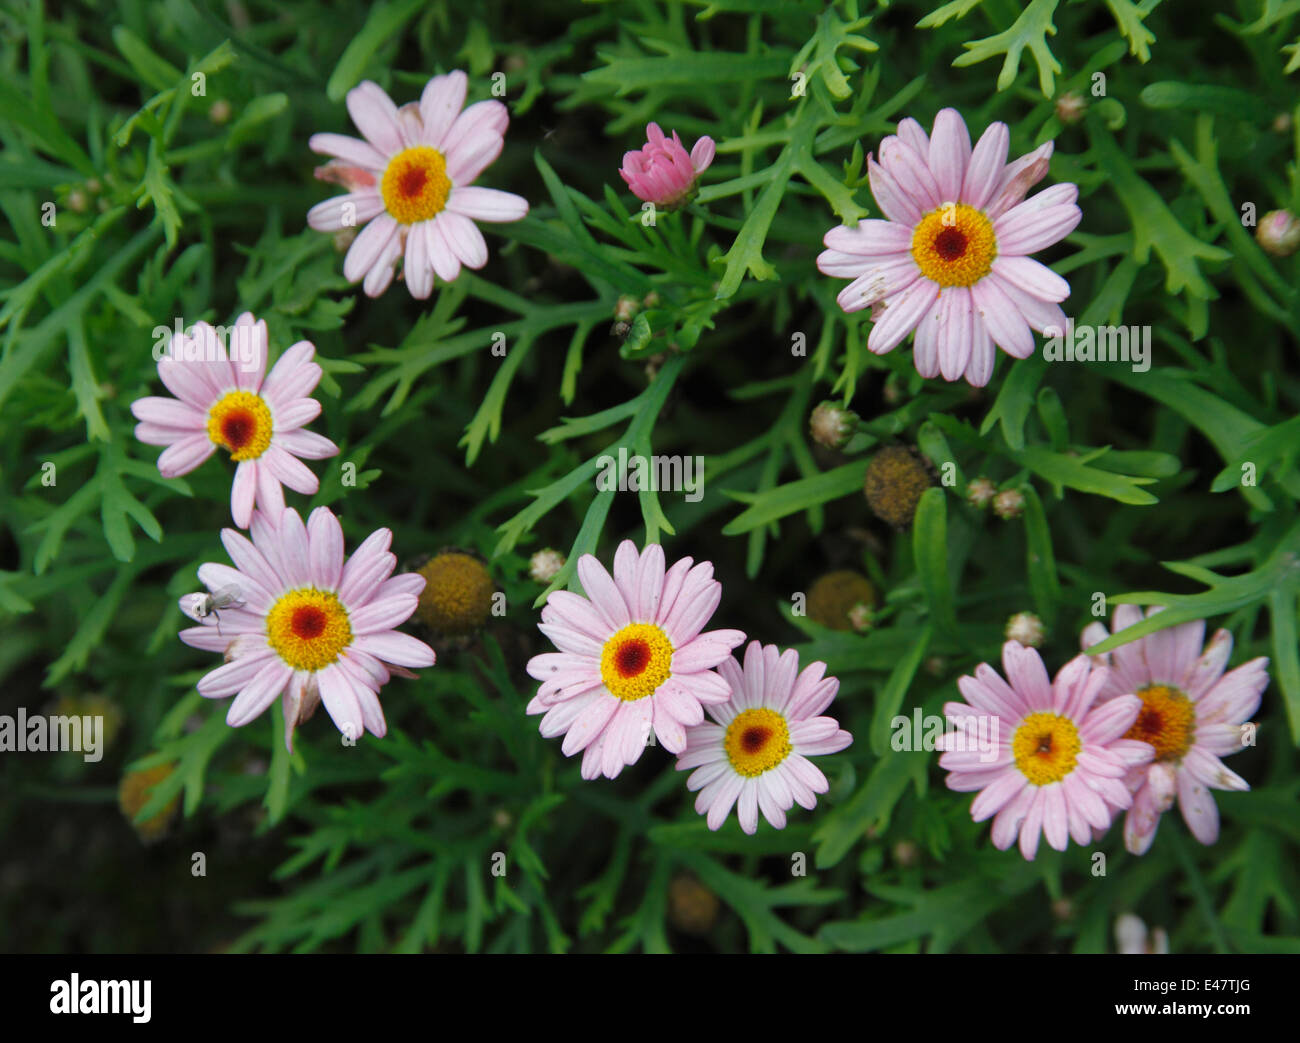 Agryanthemum frutescens Molimba L Pink 'Sas Pinka' close up of flower Stock Photo